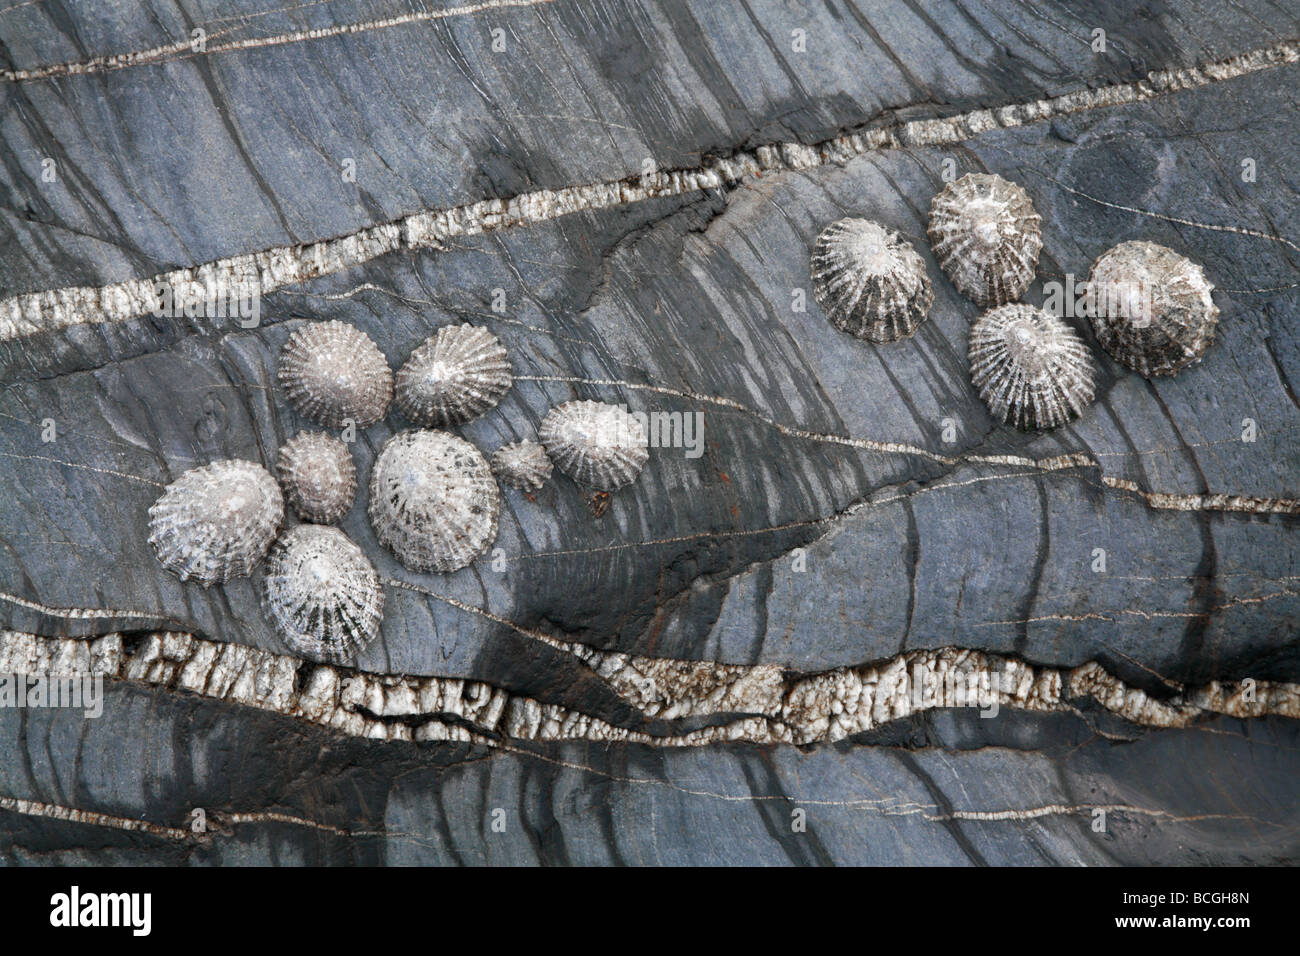 Common limpet Patella vulgata colonia entre bandas de cuarzo basalto con marea baja. Foto de stock